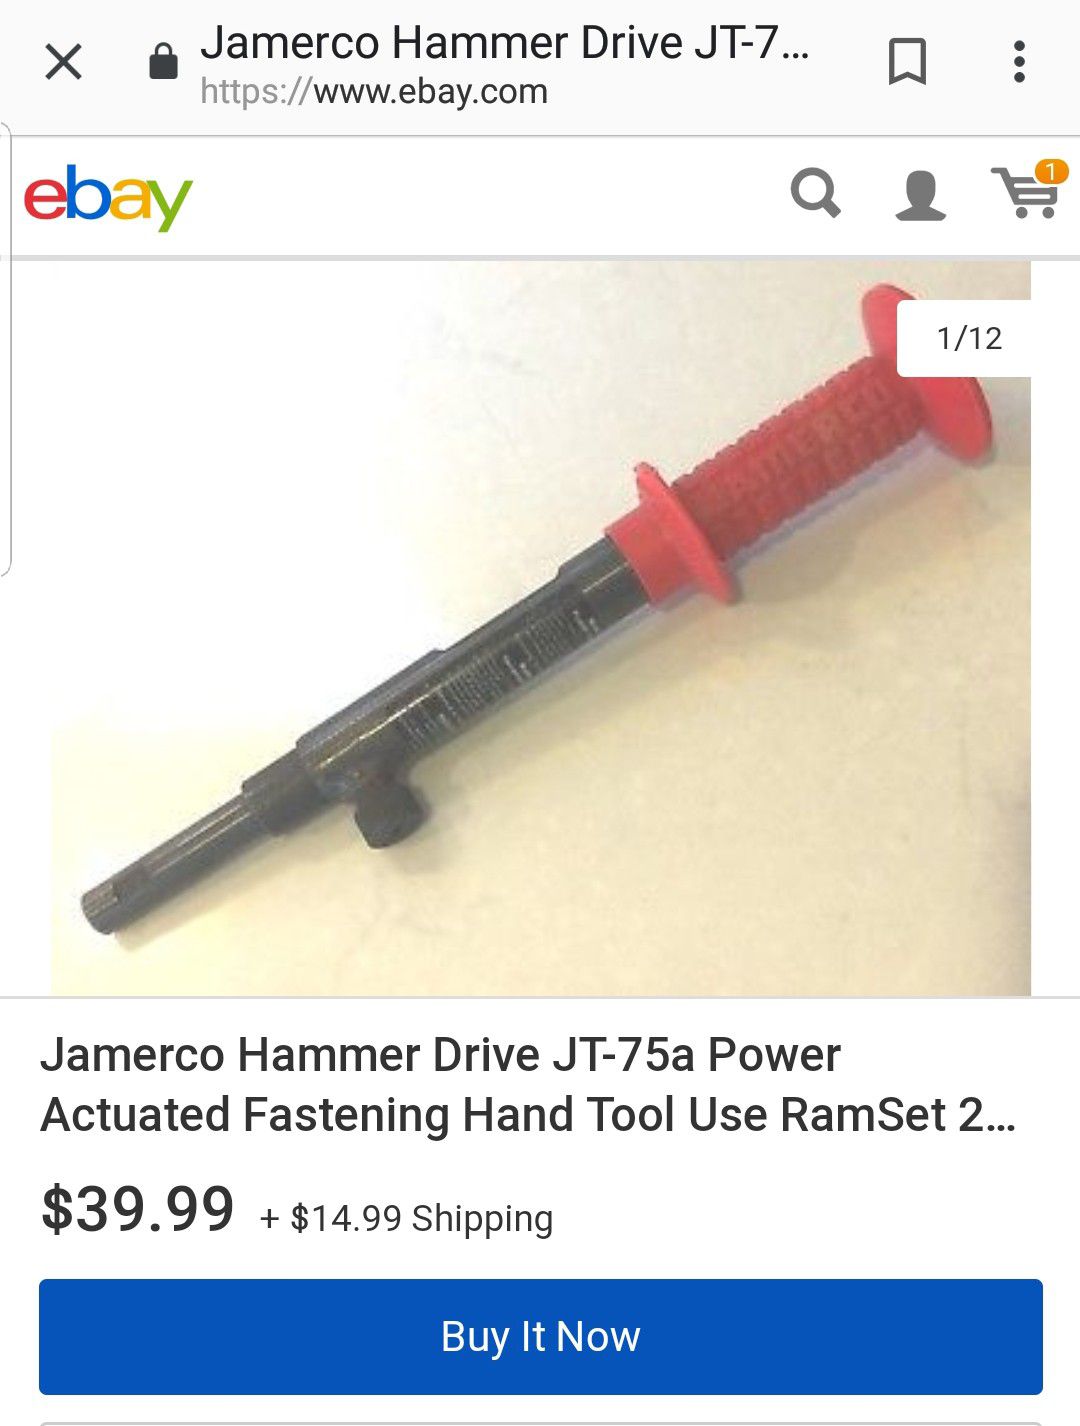 Hammer drive